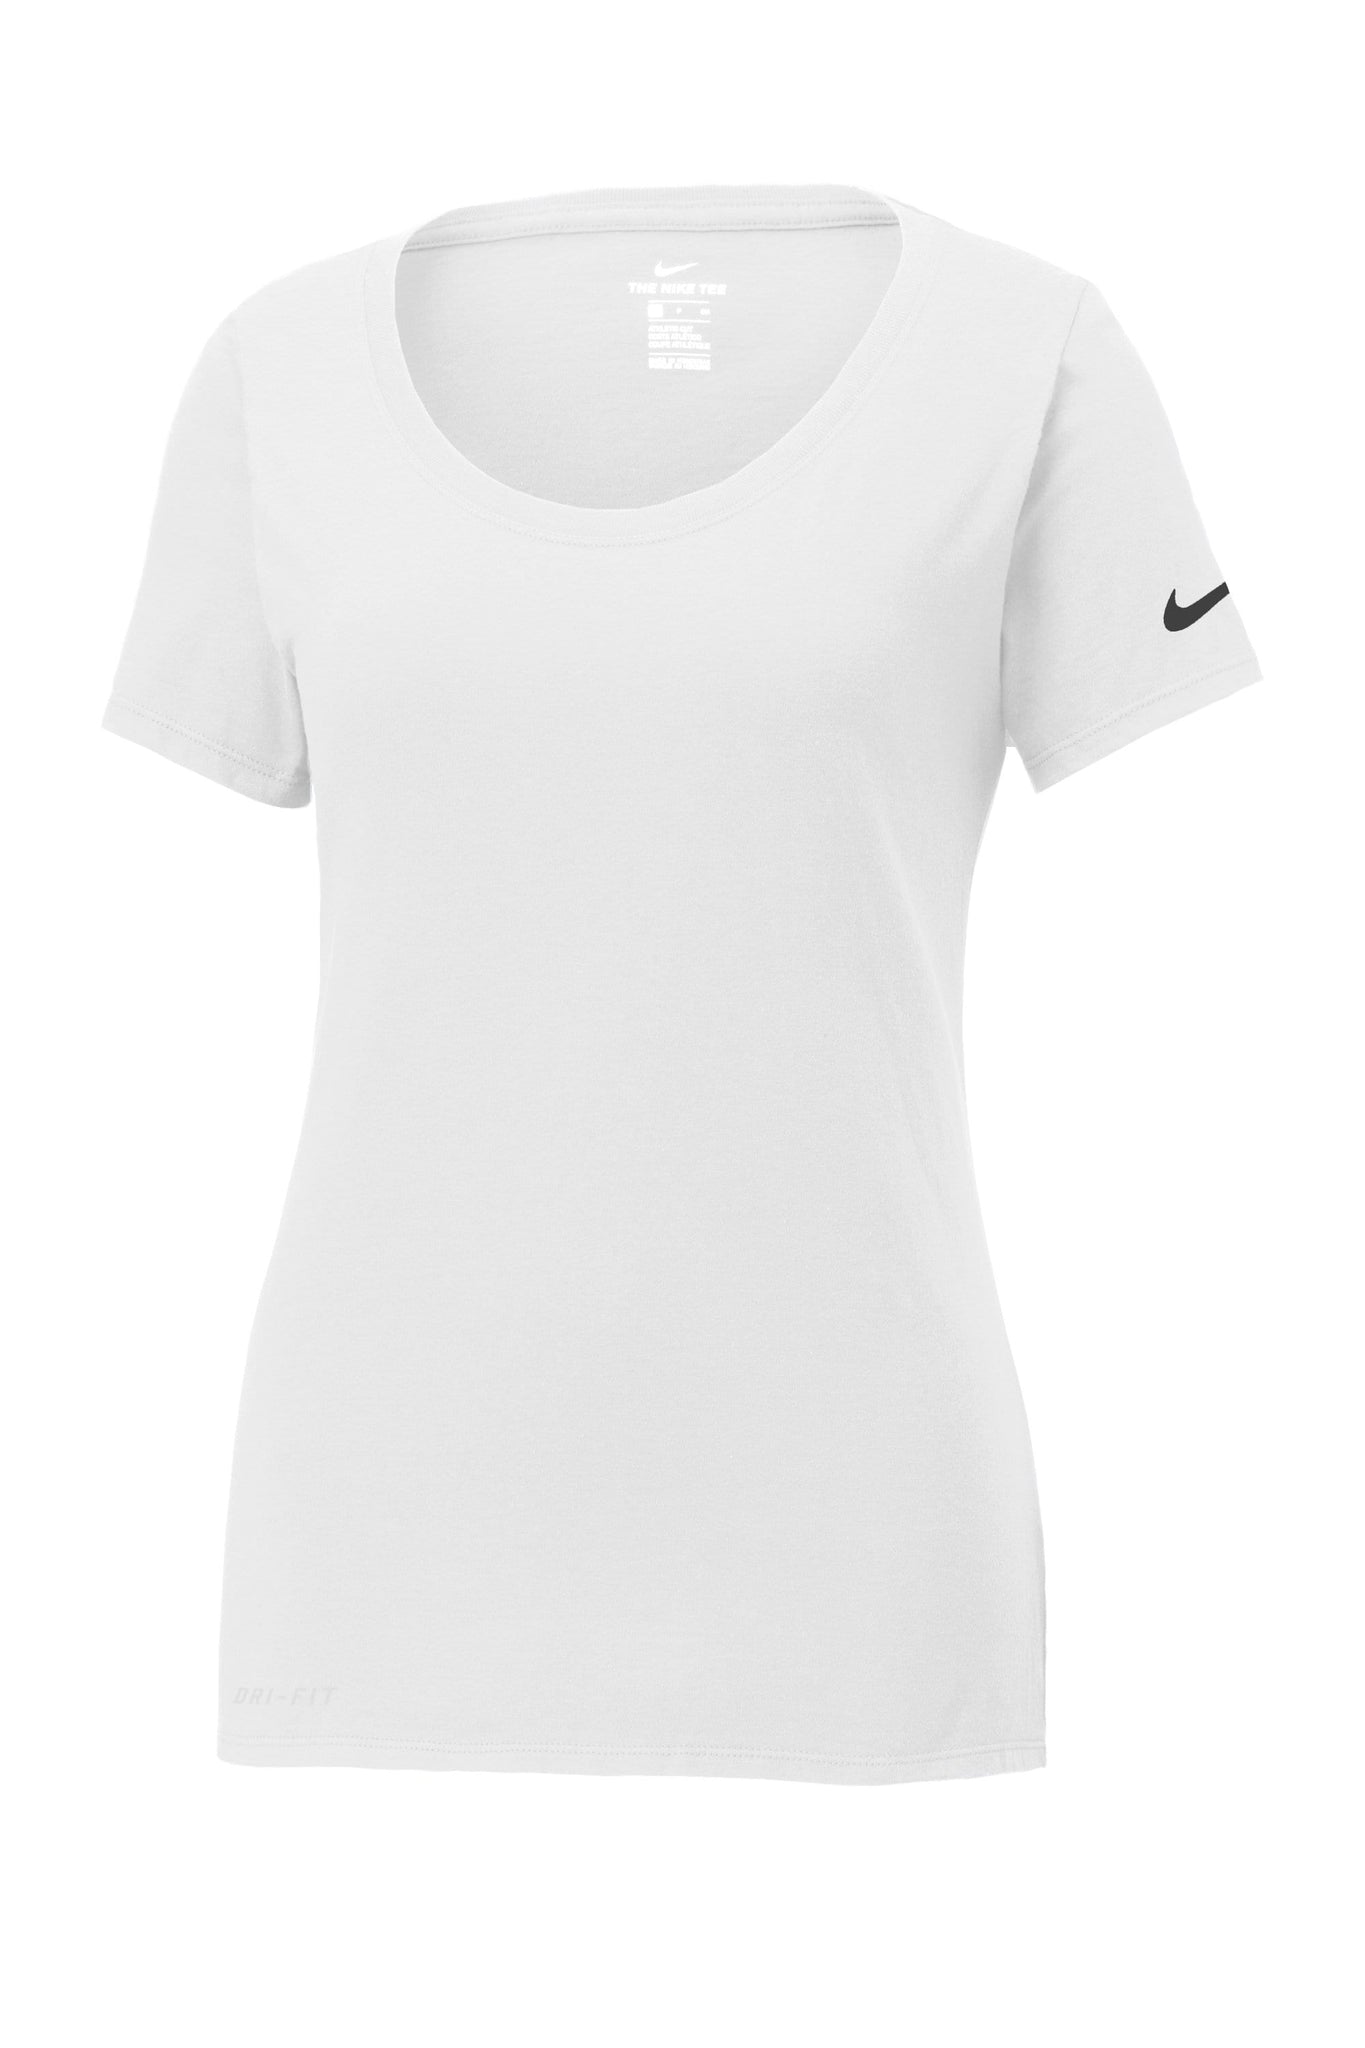 Nike - Women's Dri-FIT Cotton/Poly Scoop Neck Tee